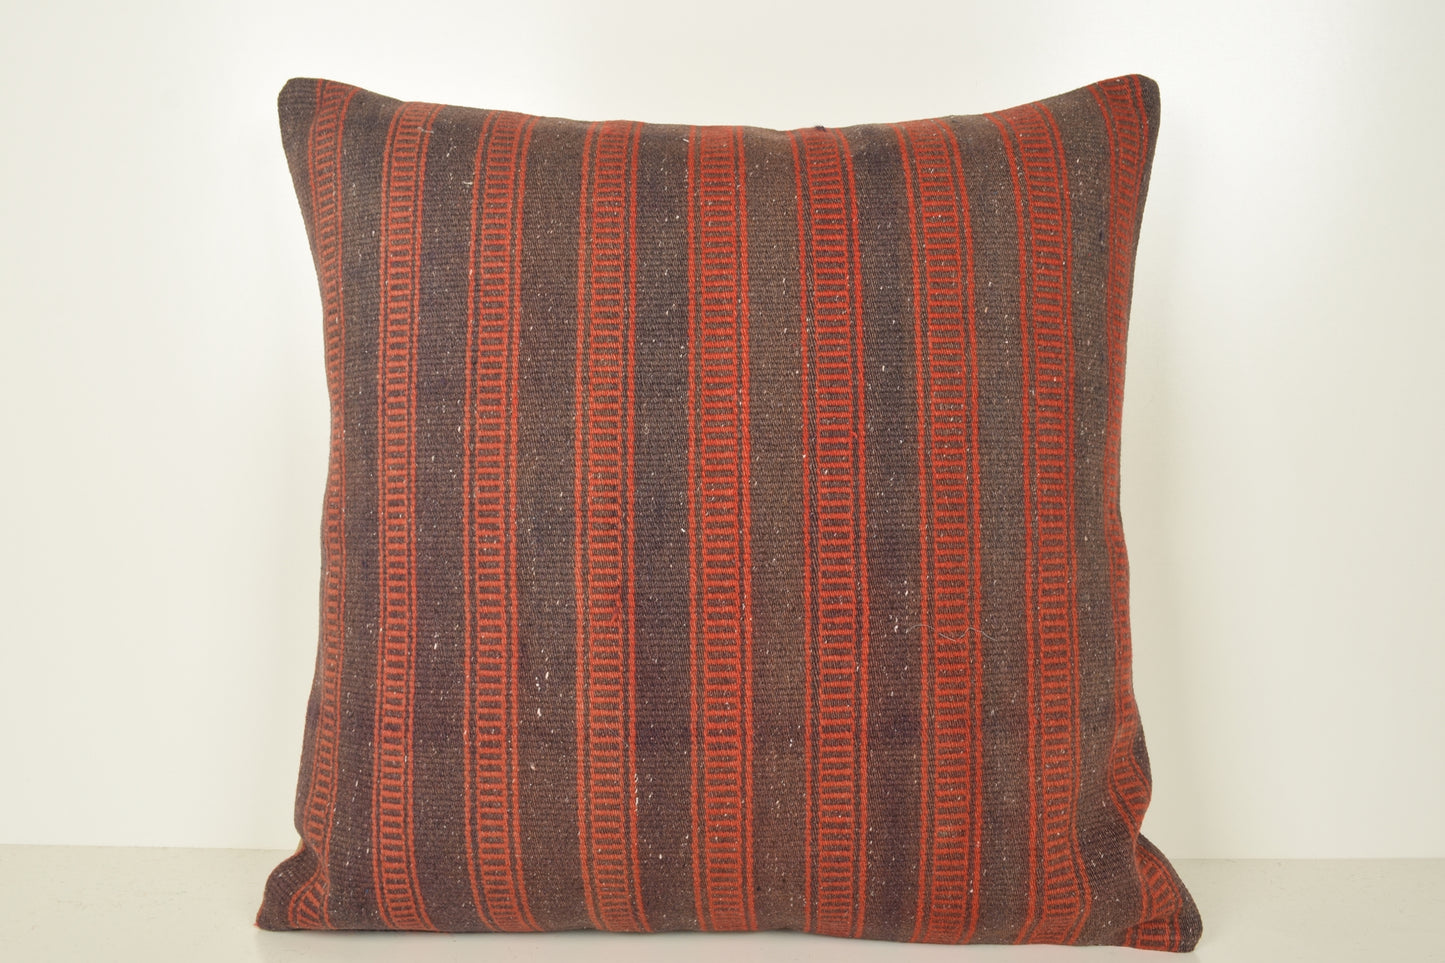 Turkish Cushions Ebay A01000 24x24 Traditional Primary Mediterranean